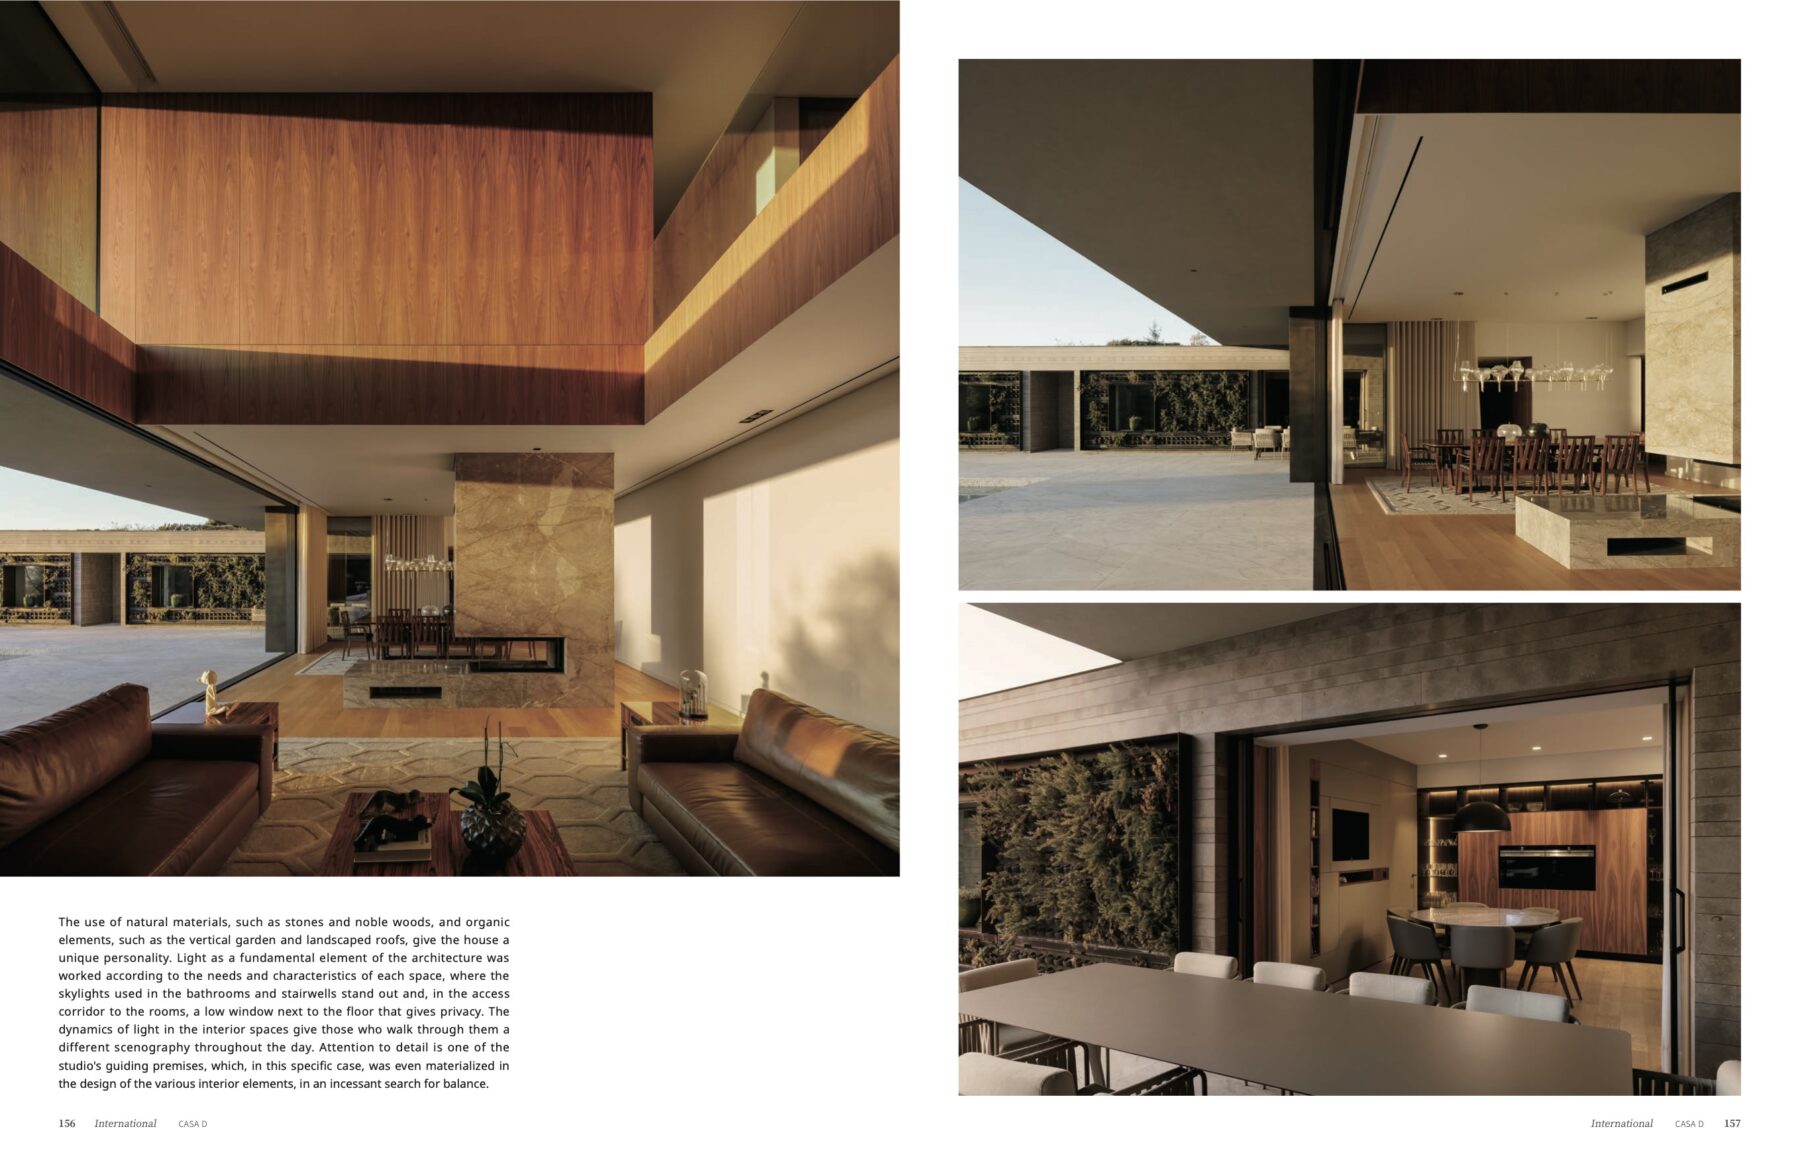 Deco Journal #328 do atelier L2C Arquitetura com fotografia arquitetura de ivo tavares studio - architectural photography